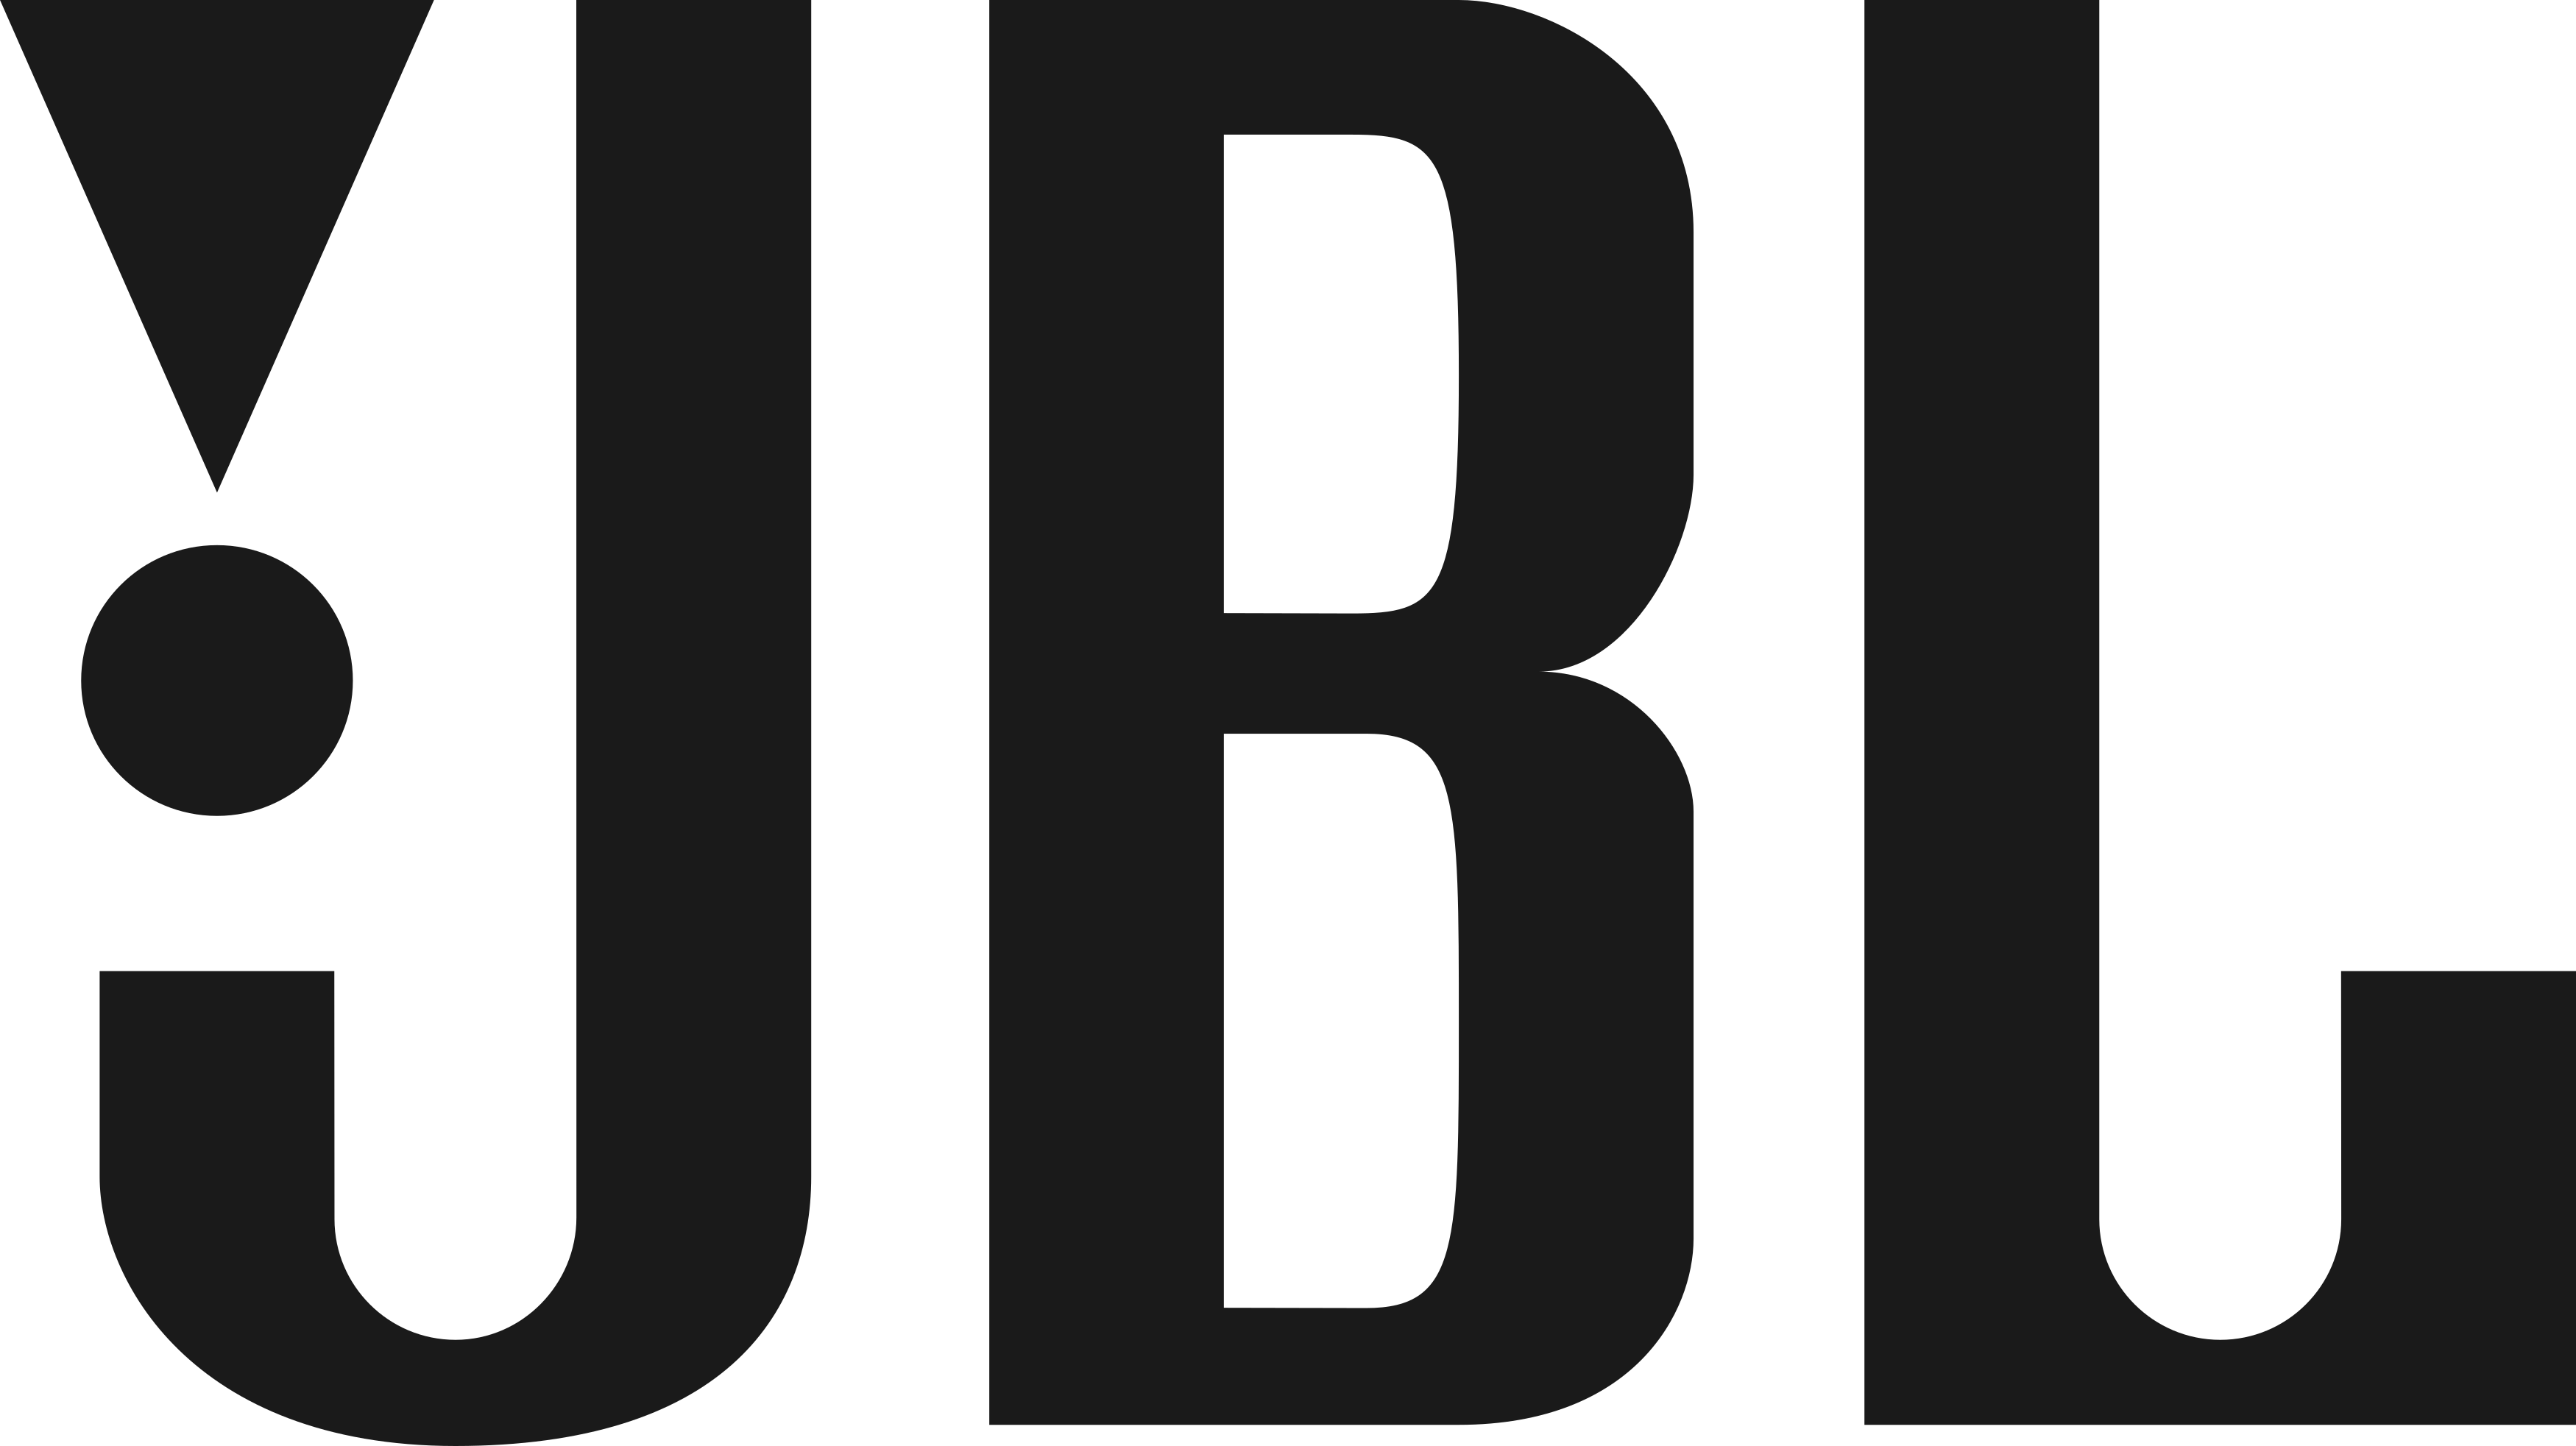 JBL logo.